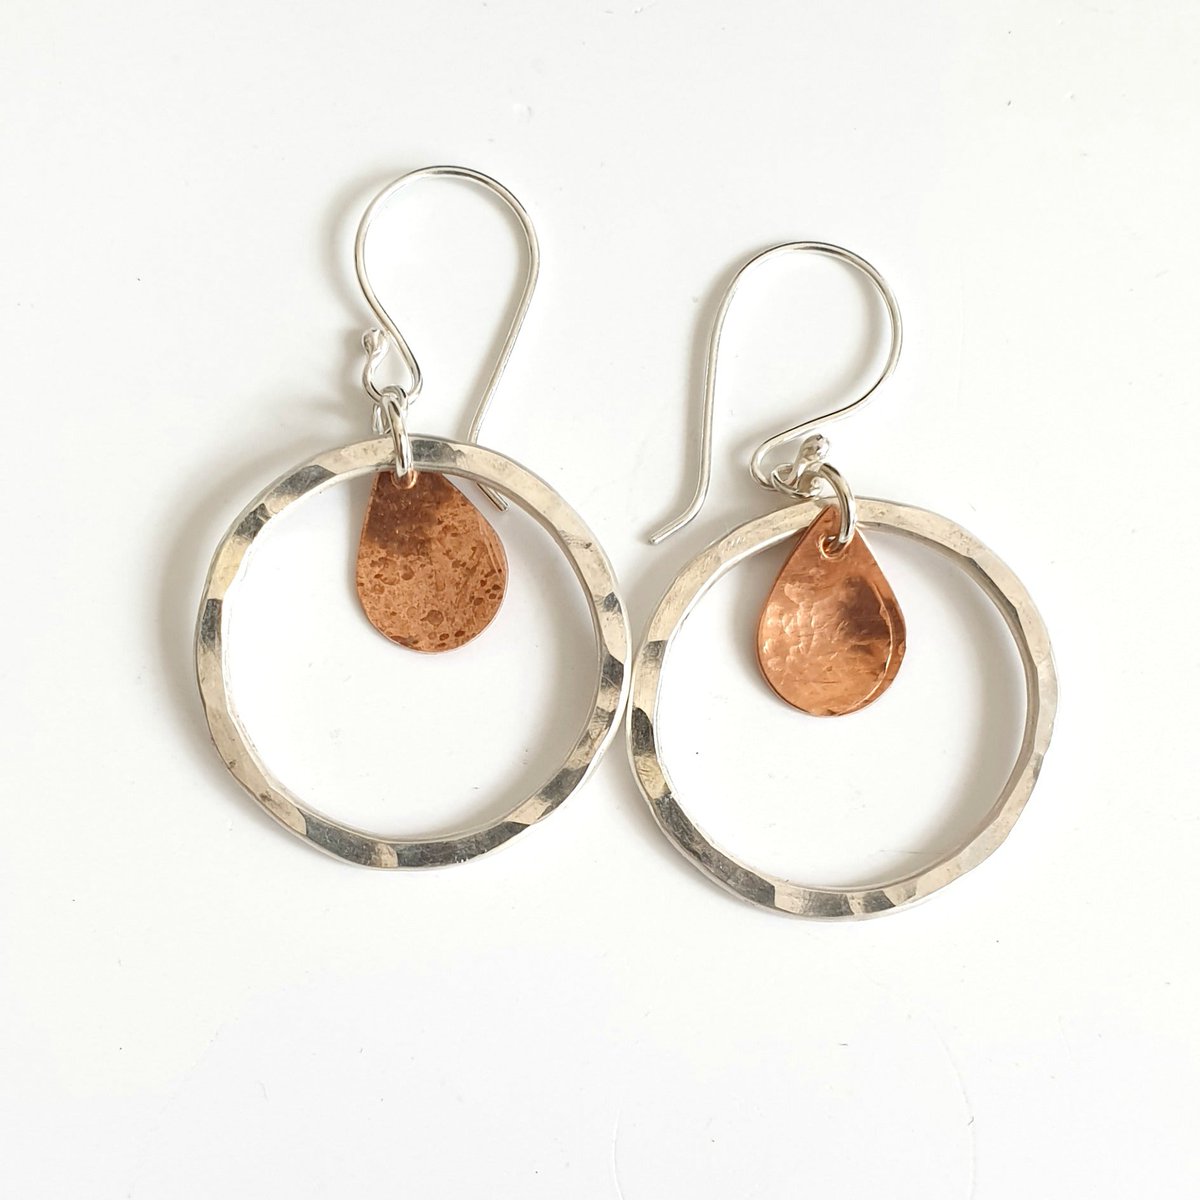 Silver and Copper Hoop Earrings tuppu.net/70fc8172 #HandmadeHour #UKHashtags #giftideas #shopsmall #inbizhour #MHHSBD ##UKGiftHour #bizbubble #MixedMetal